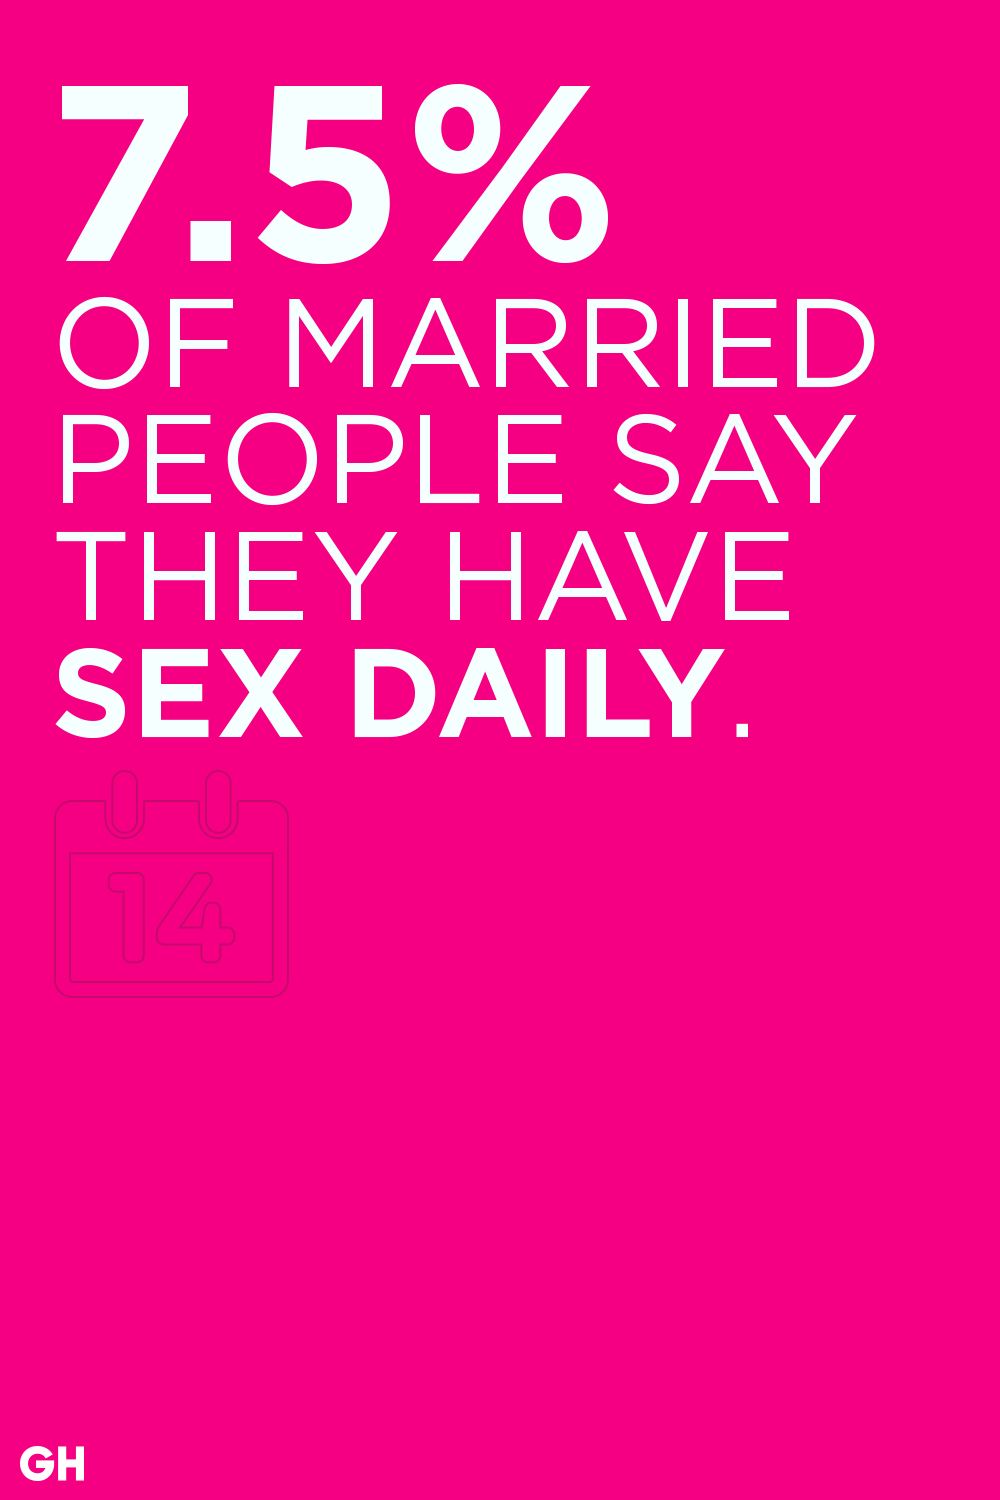 statistics on married sex